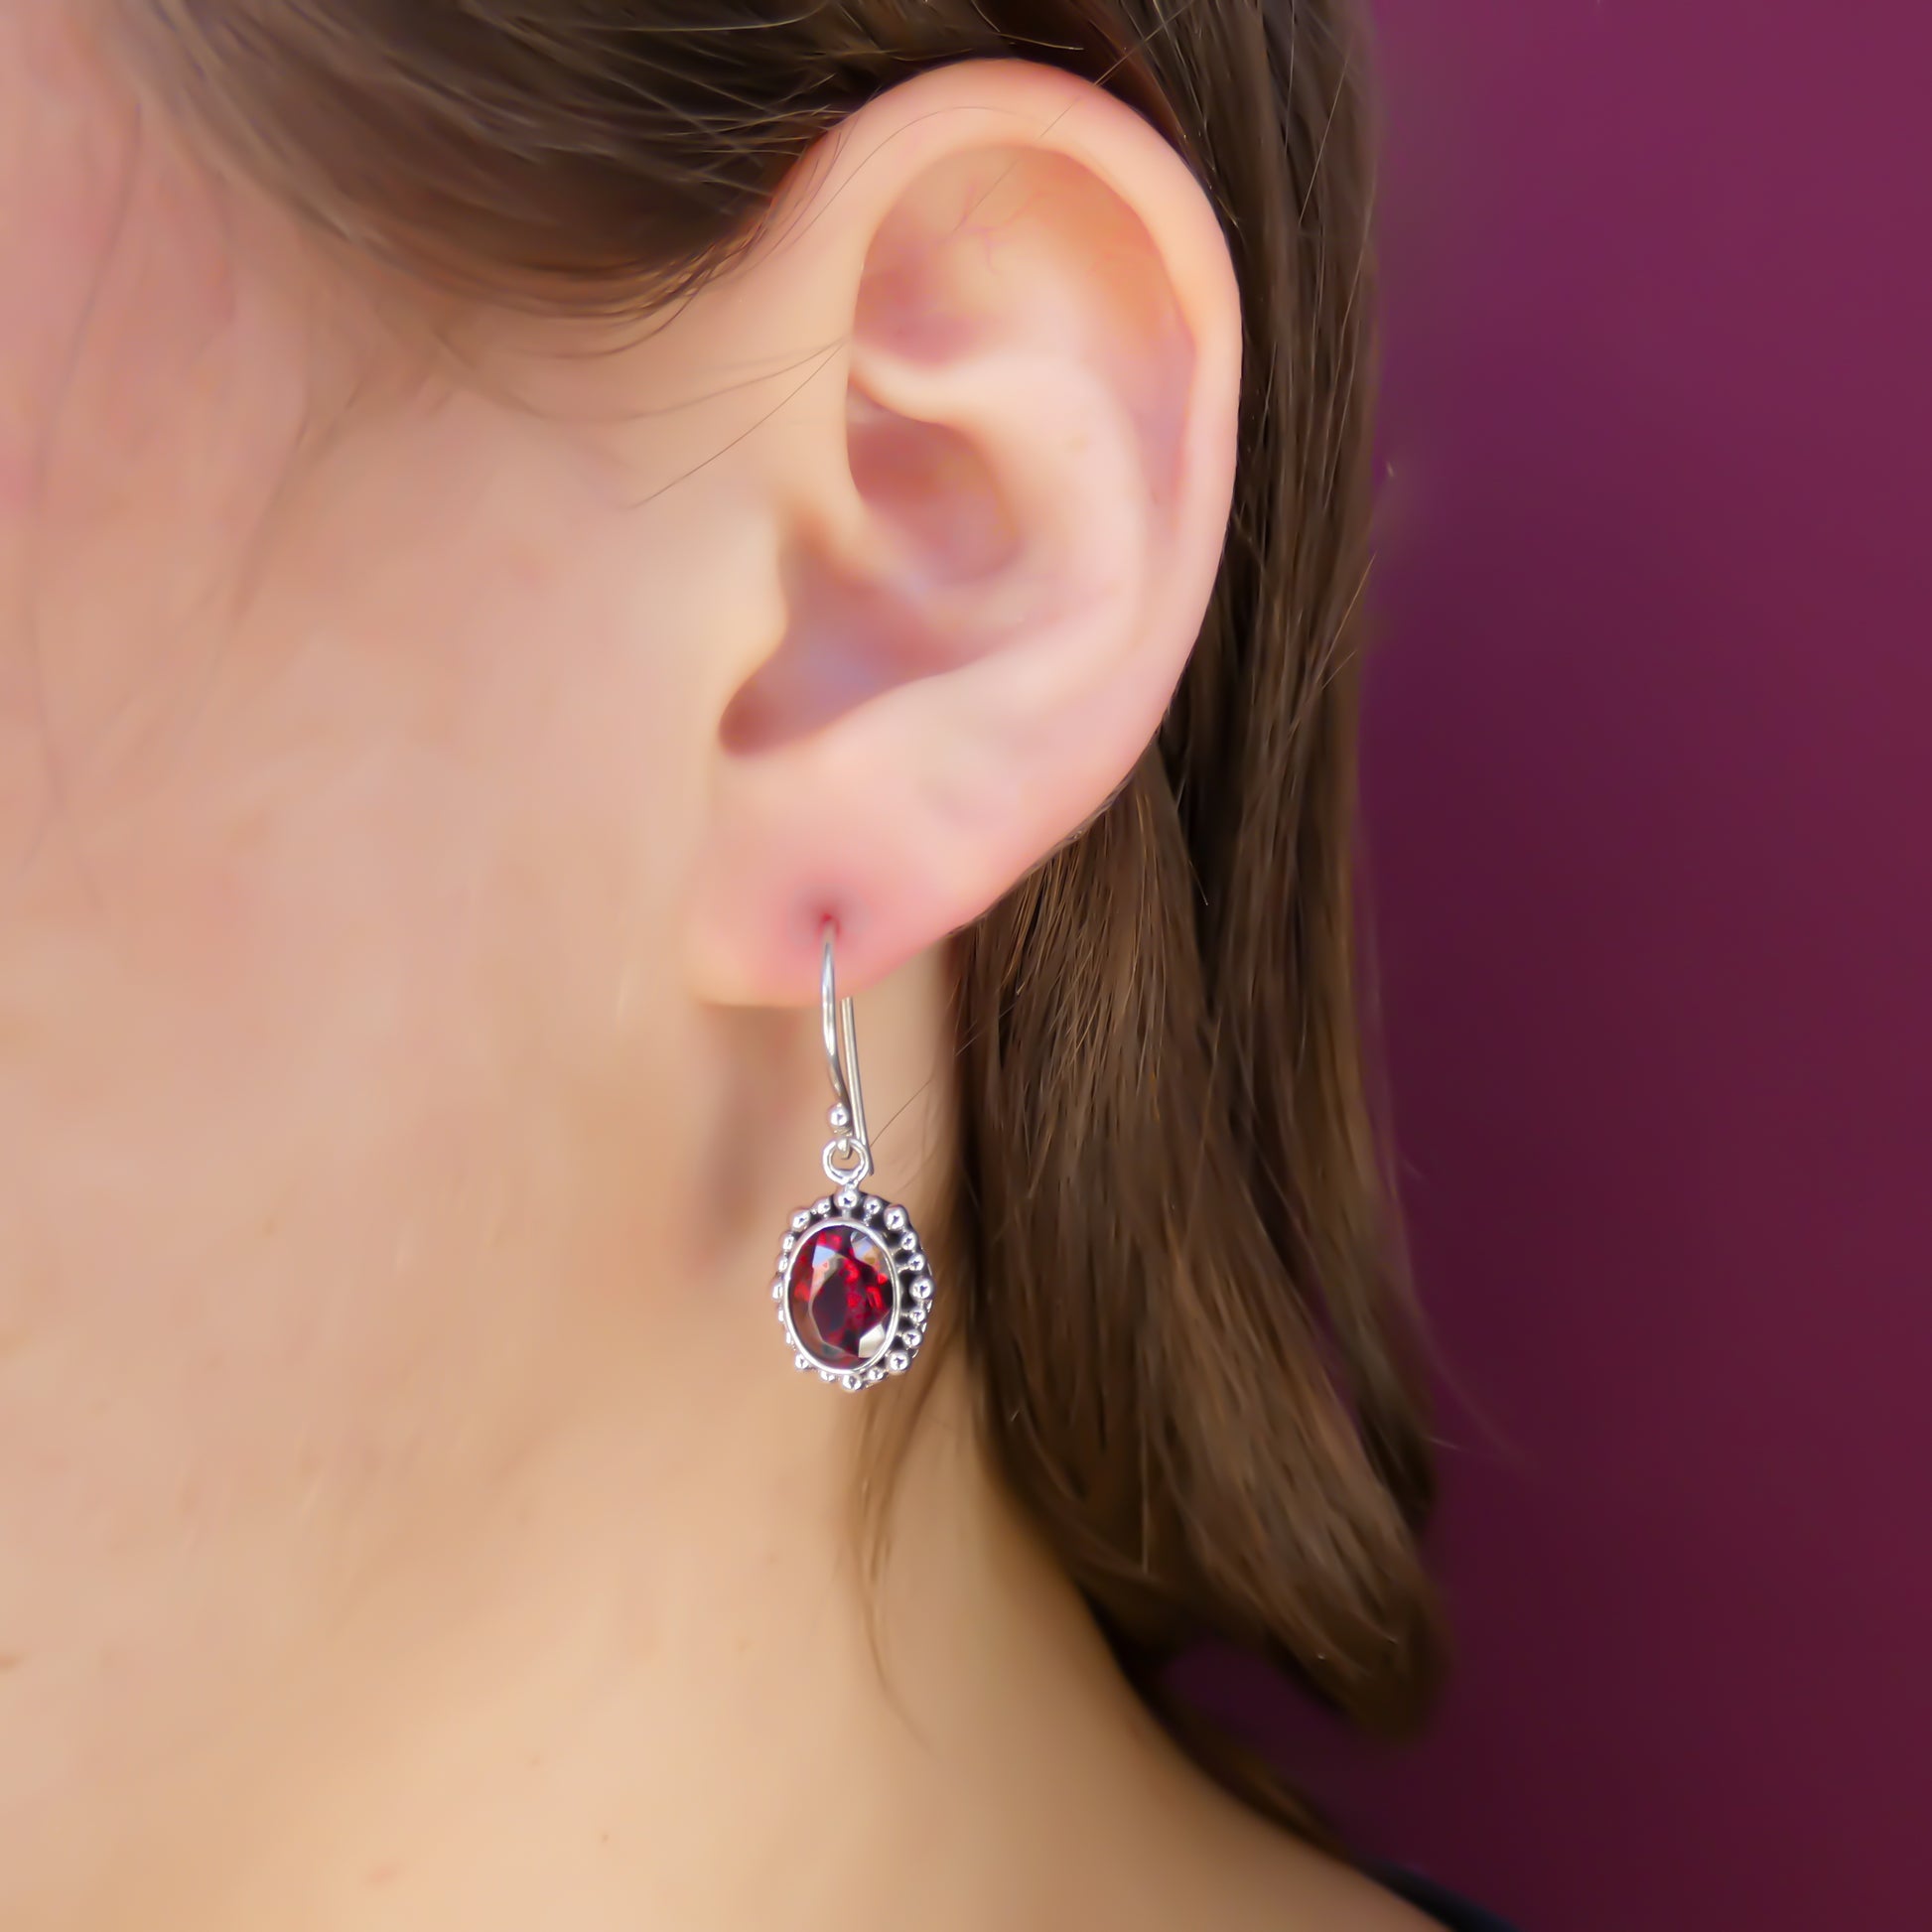 Woman wearing silver earrings with faceted garnet gemstones.